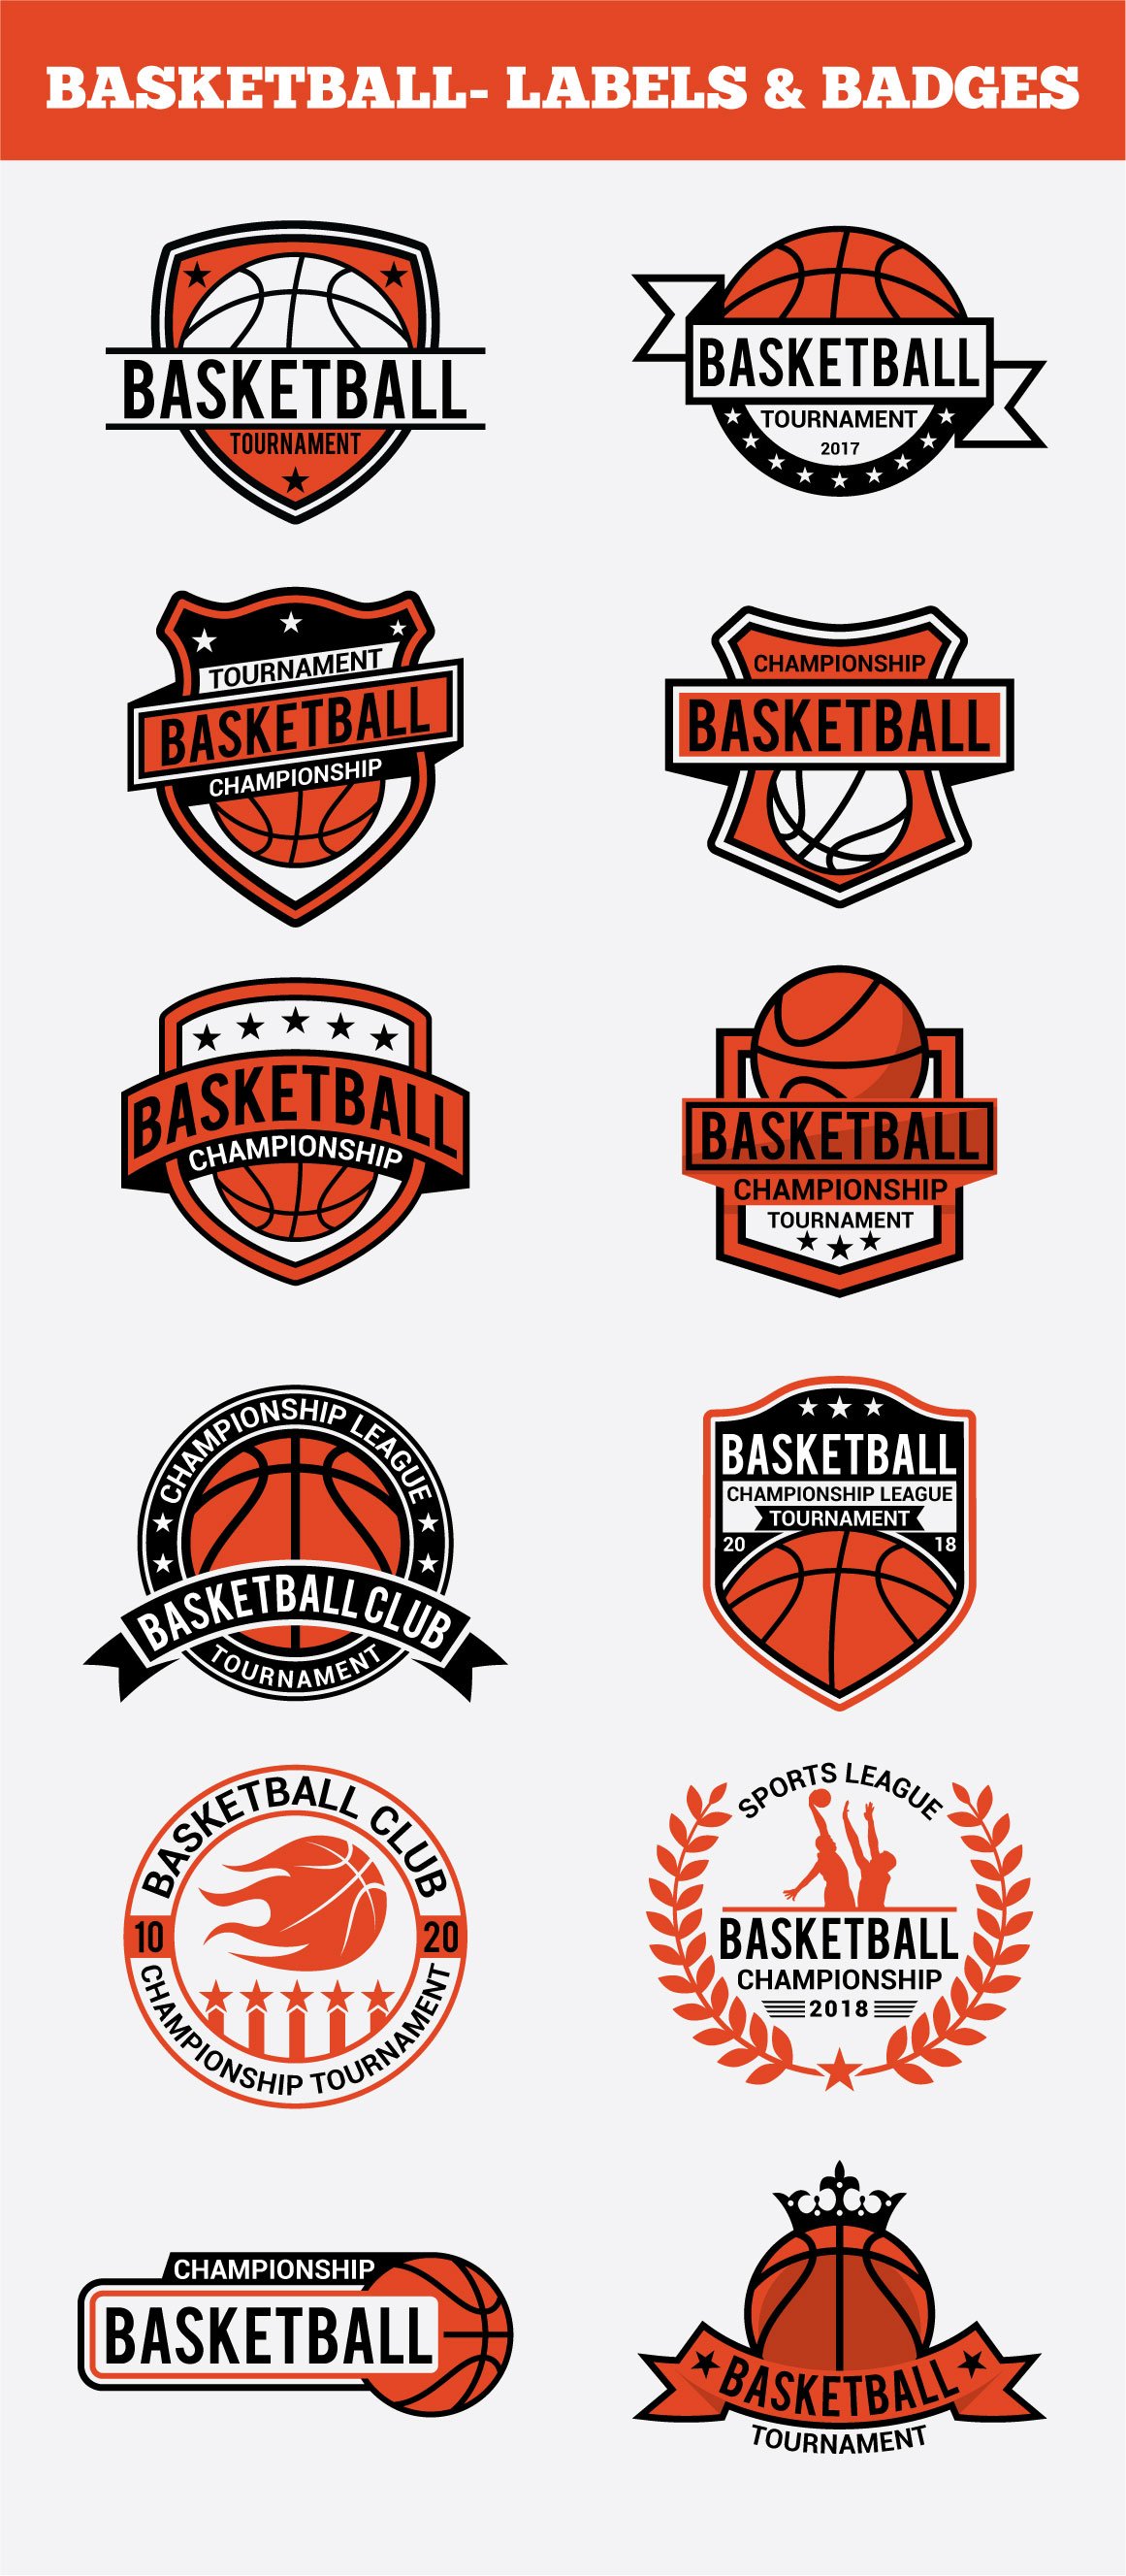 Red basketballs logos with black ribbons.